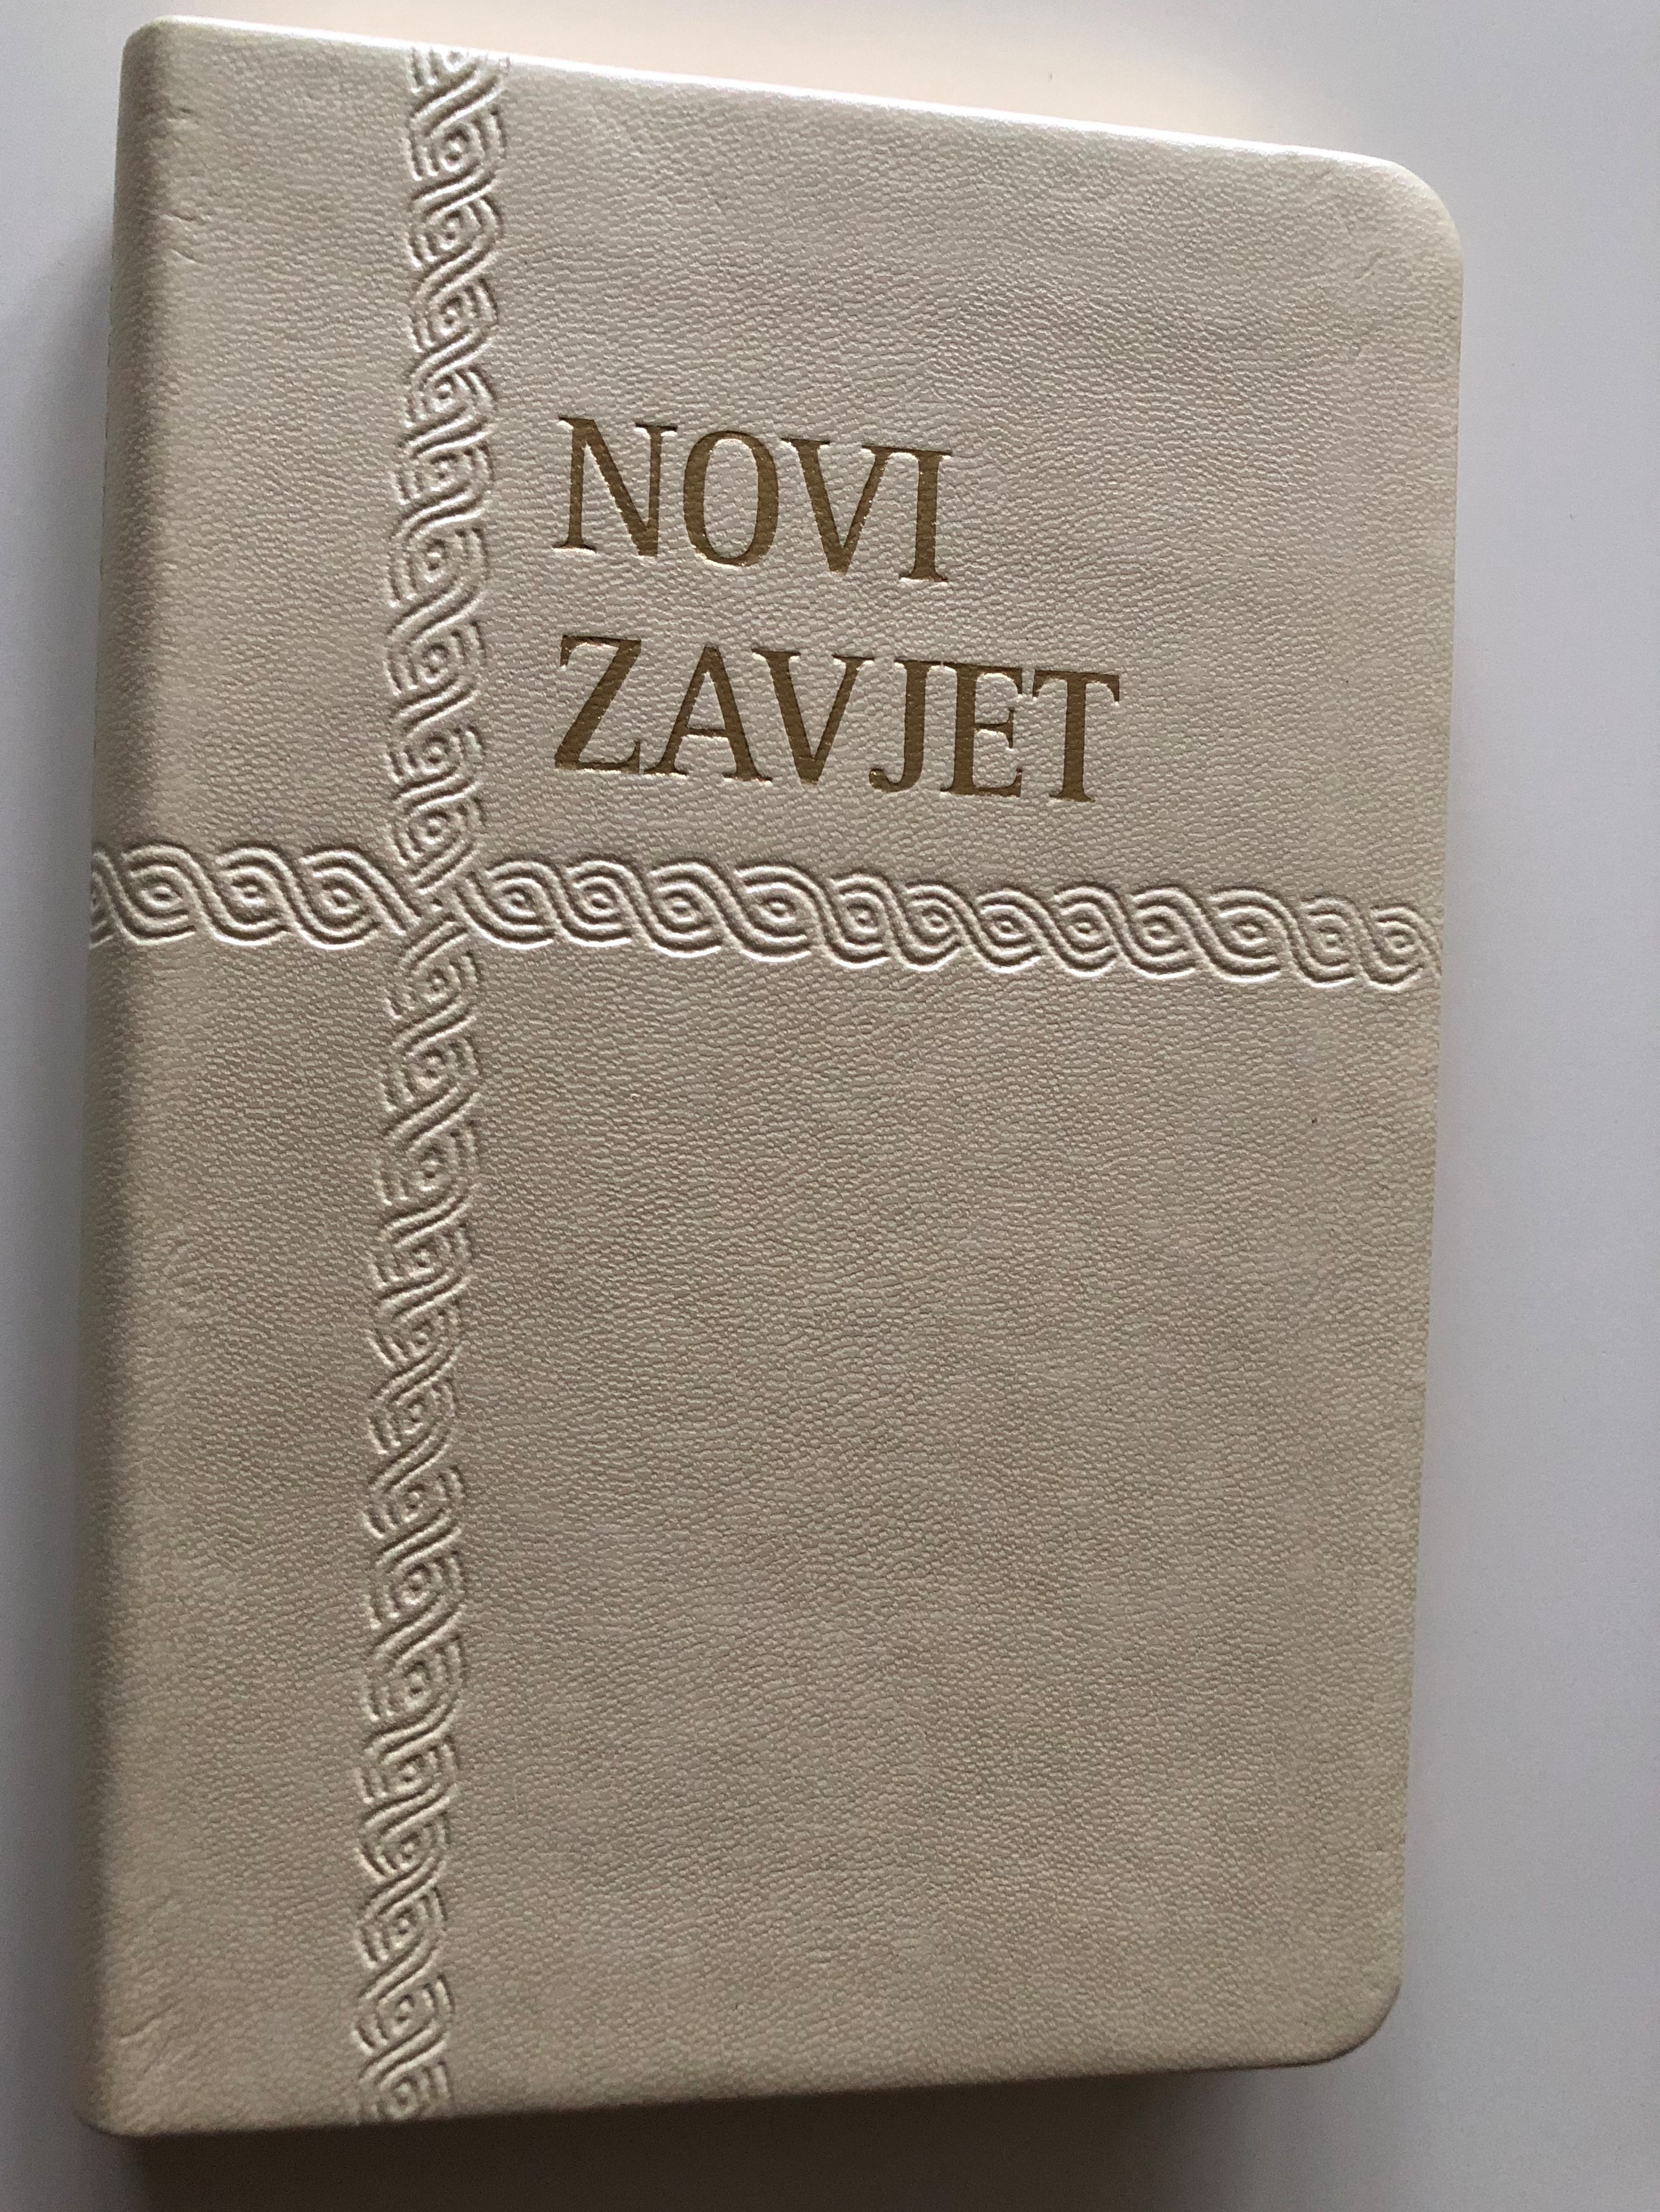 novi-zavjet-new-testament-in-croatian-language-white-leather-bound-golden-edges-1-.jpg